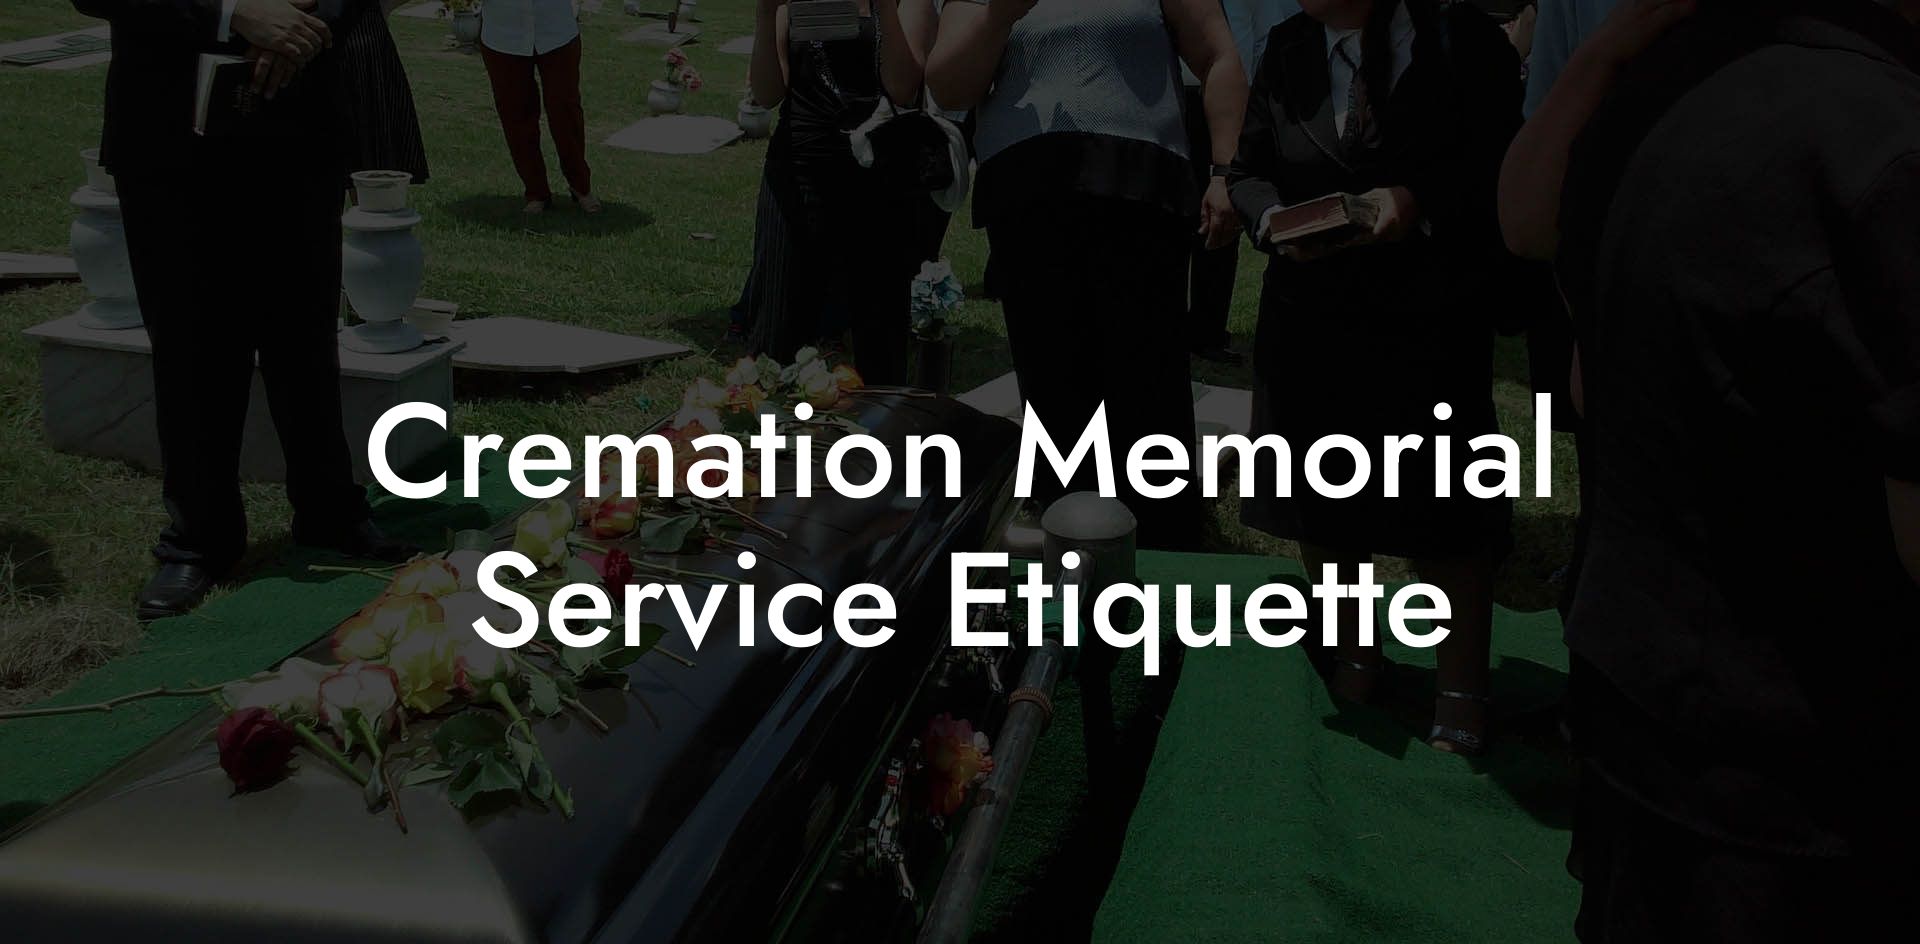 Cremation Memorial Service Etiquette